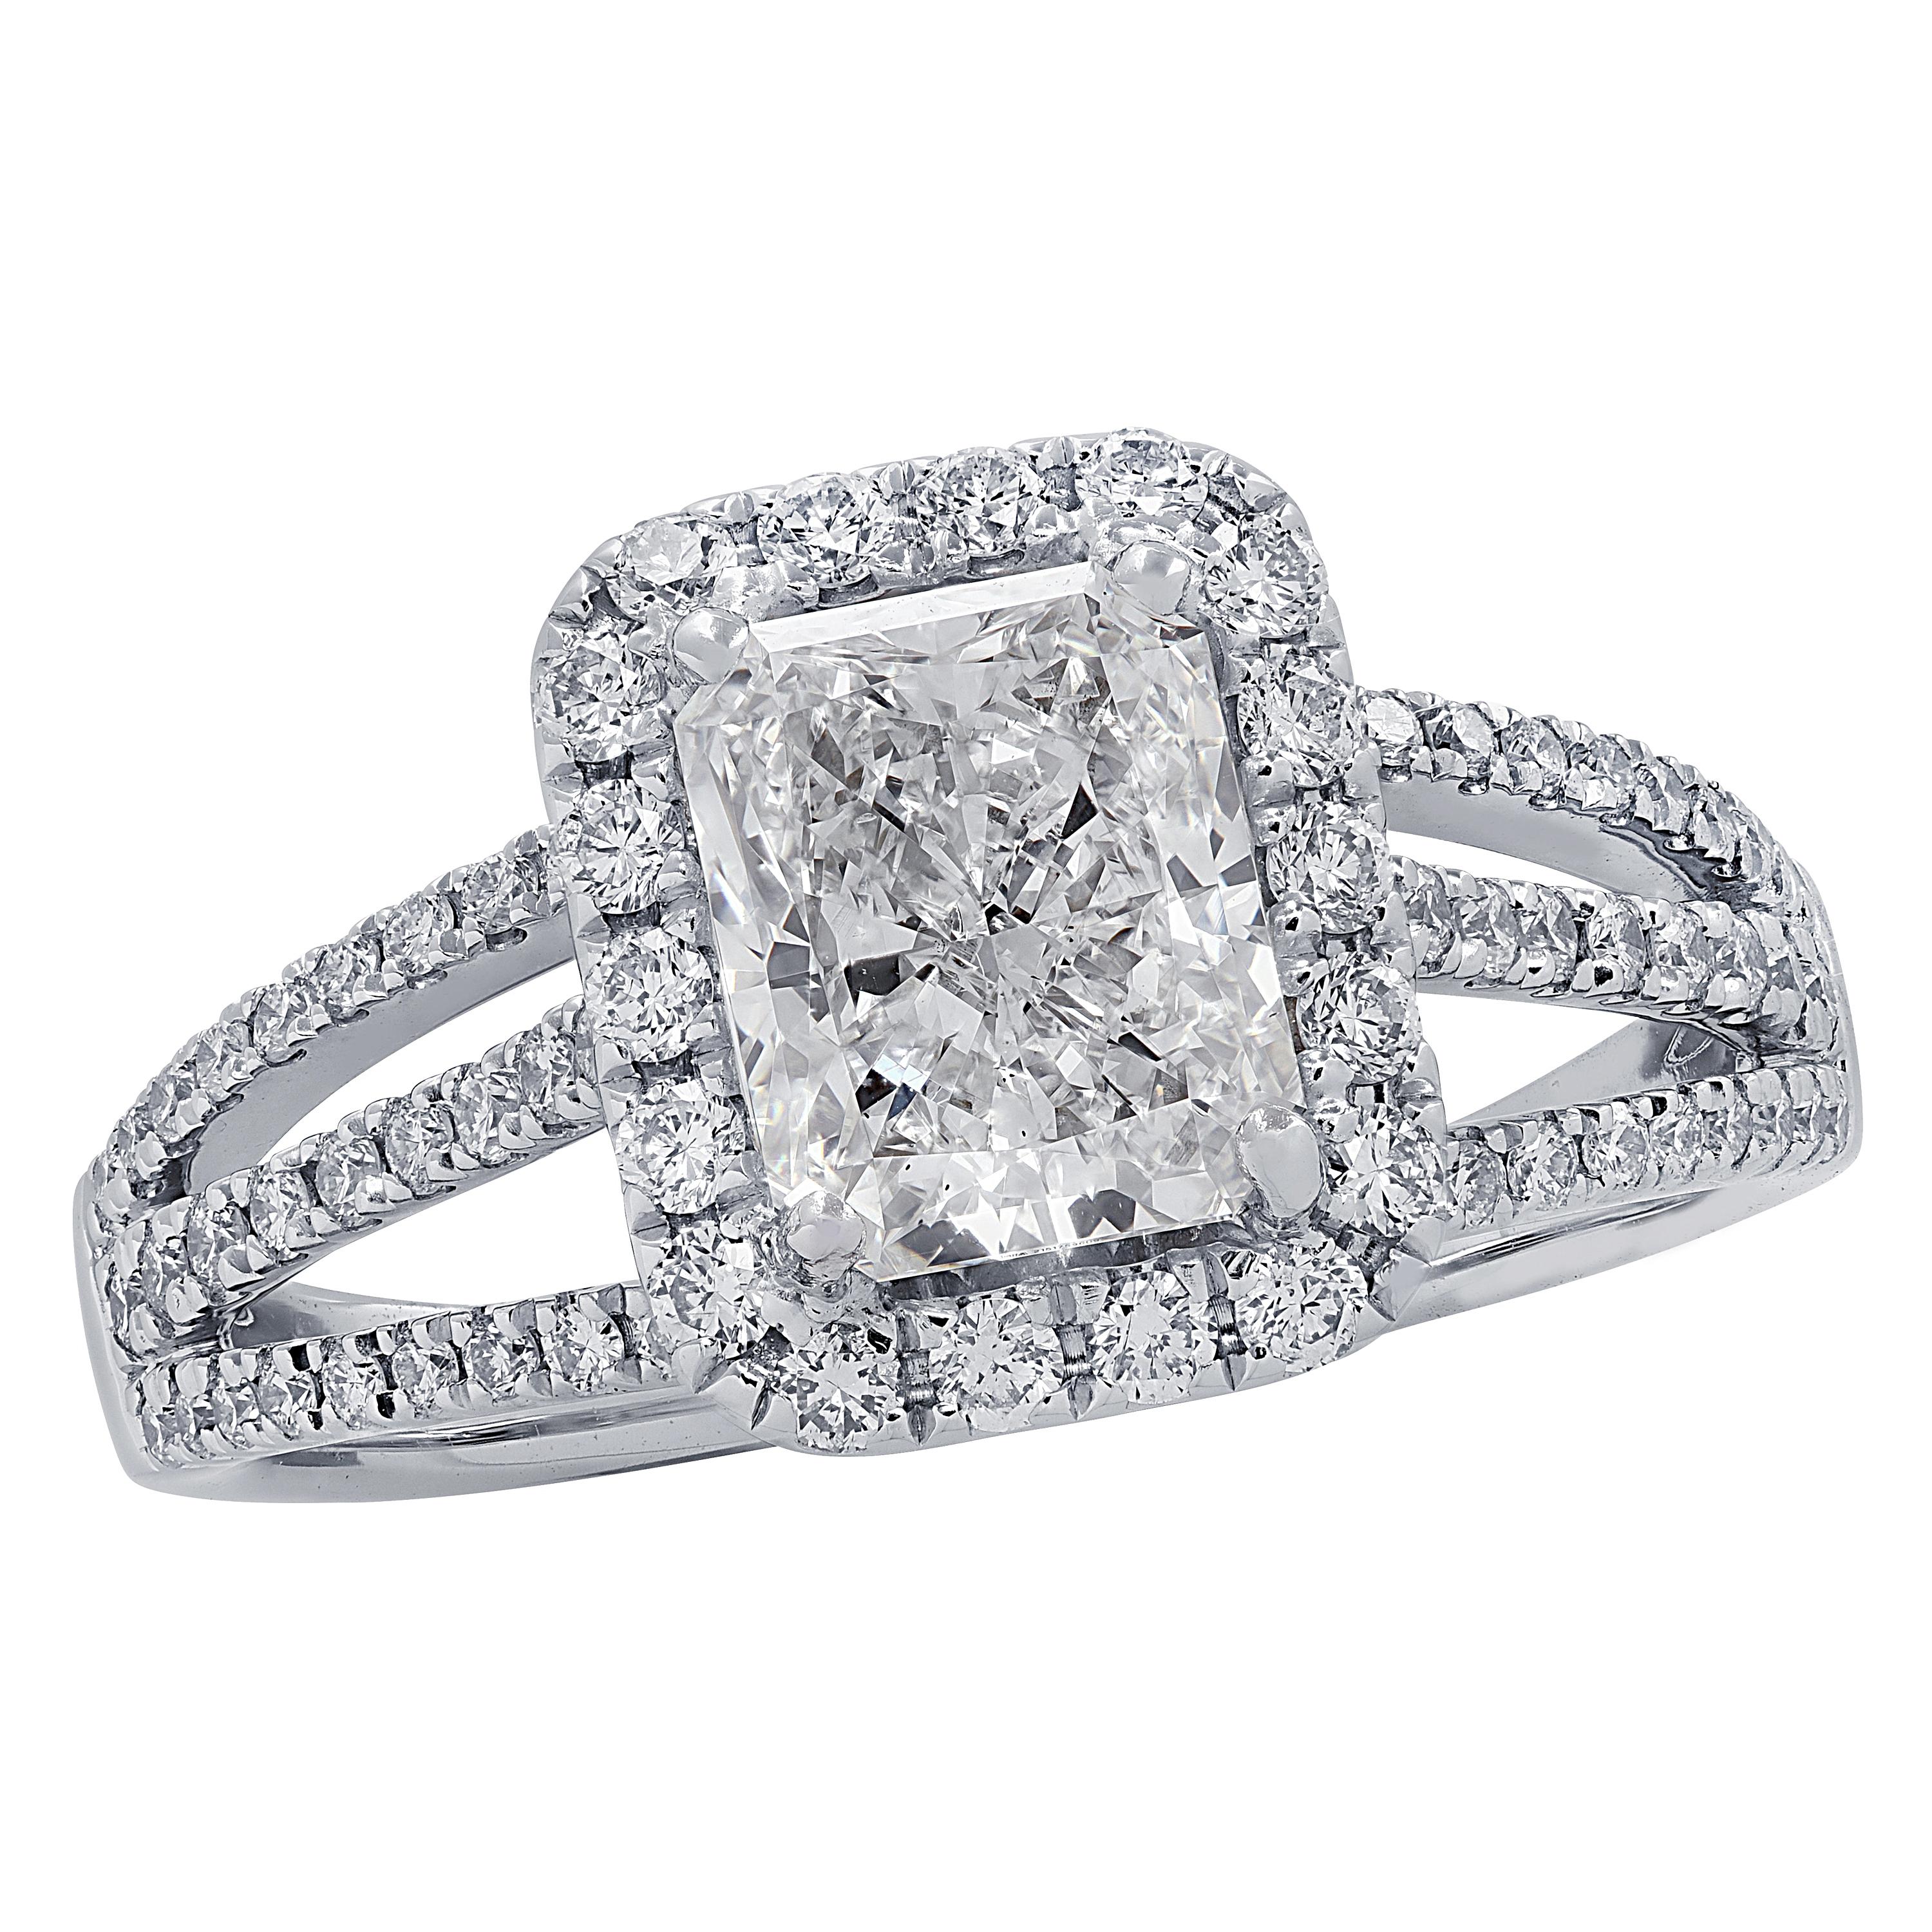 Vivid Diamonds GIA Certified 1.51 Carat Diamond Engagement Halo Ring